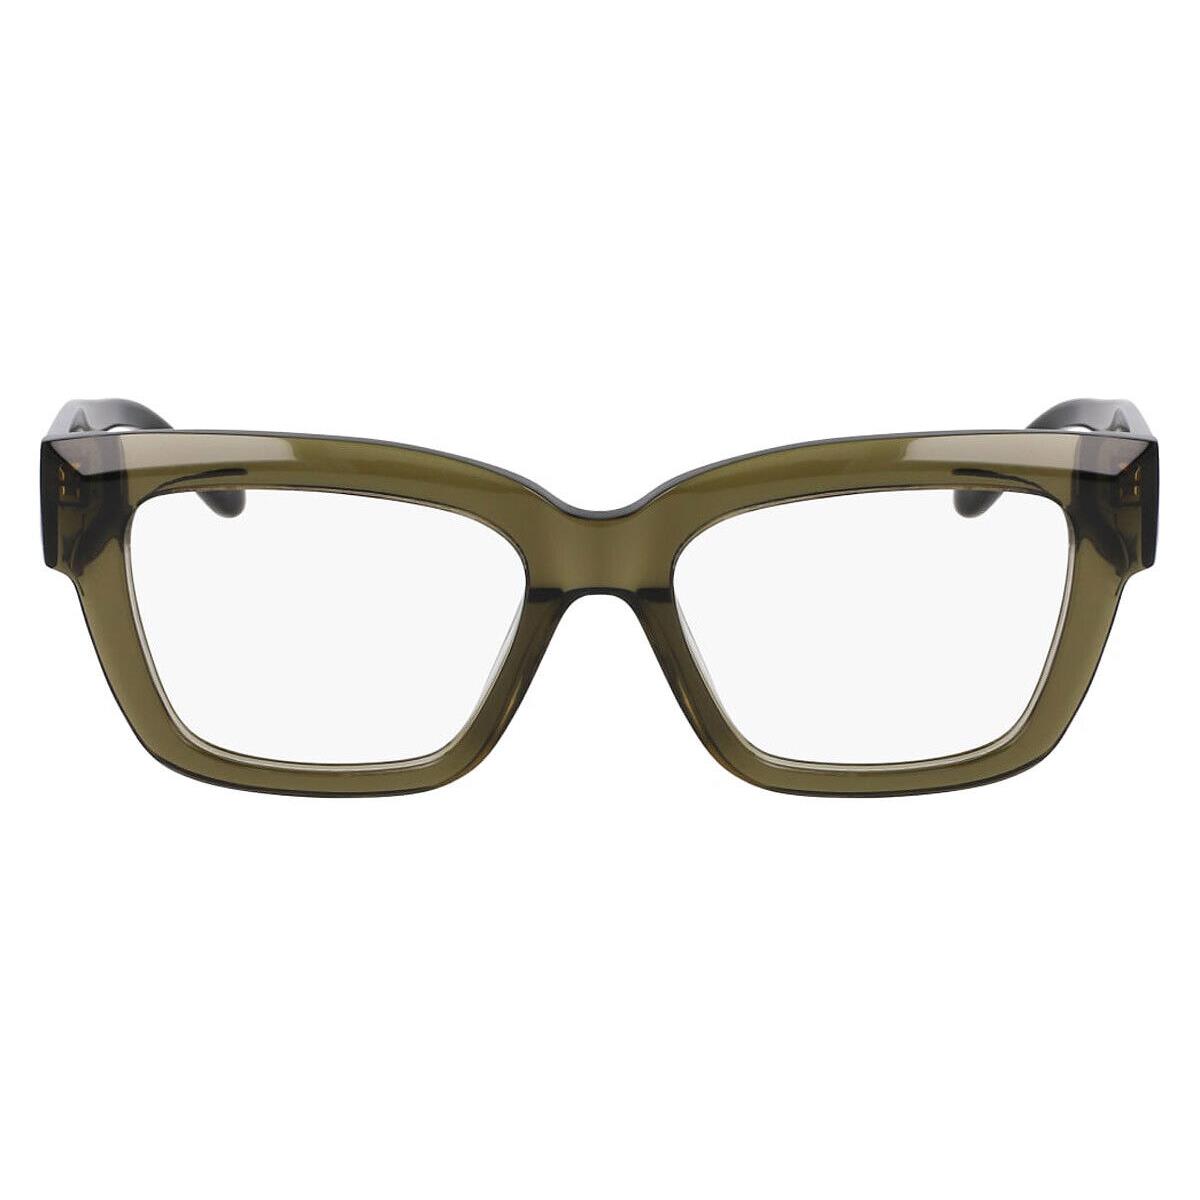 Dkny DO5014 Eyeglasses Women Olive Crystal 53mm